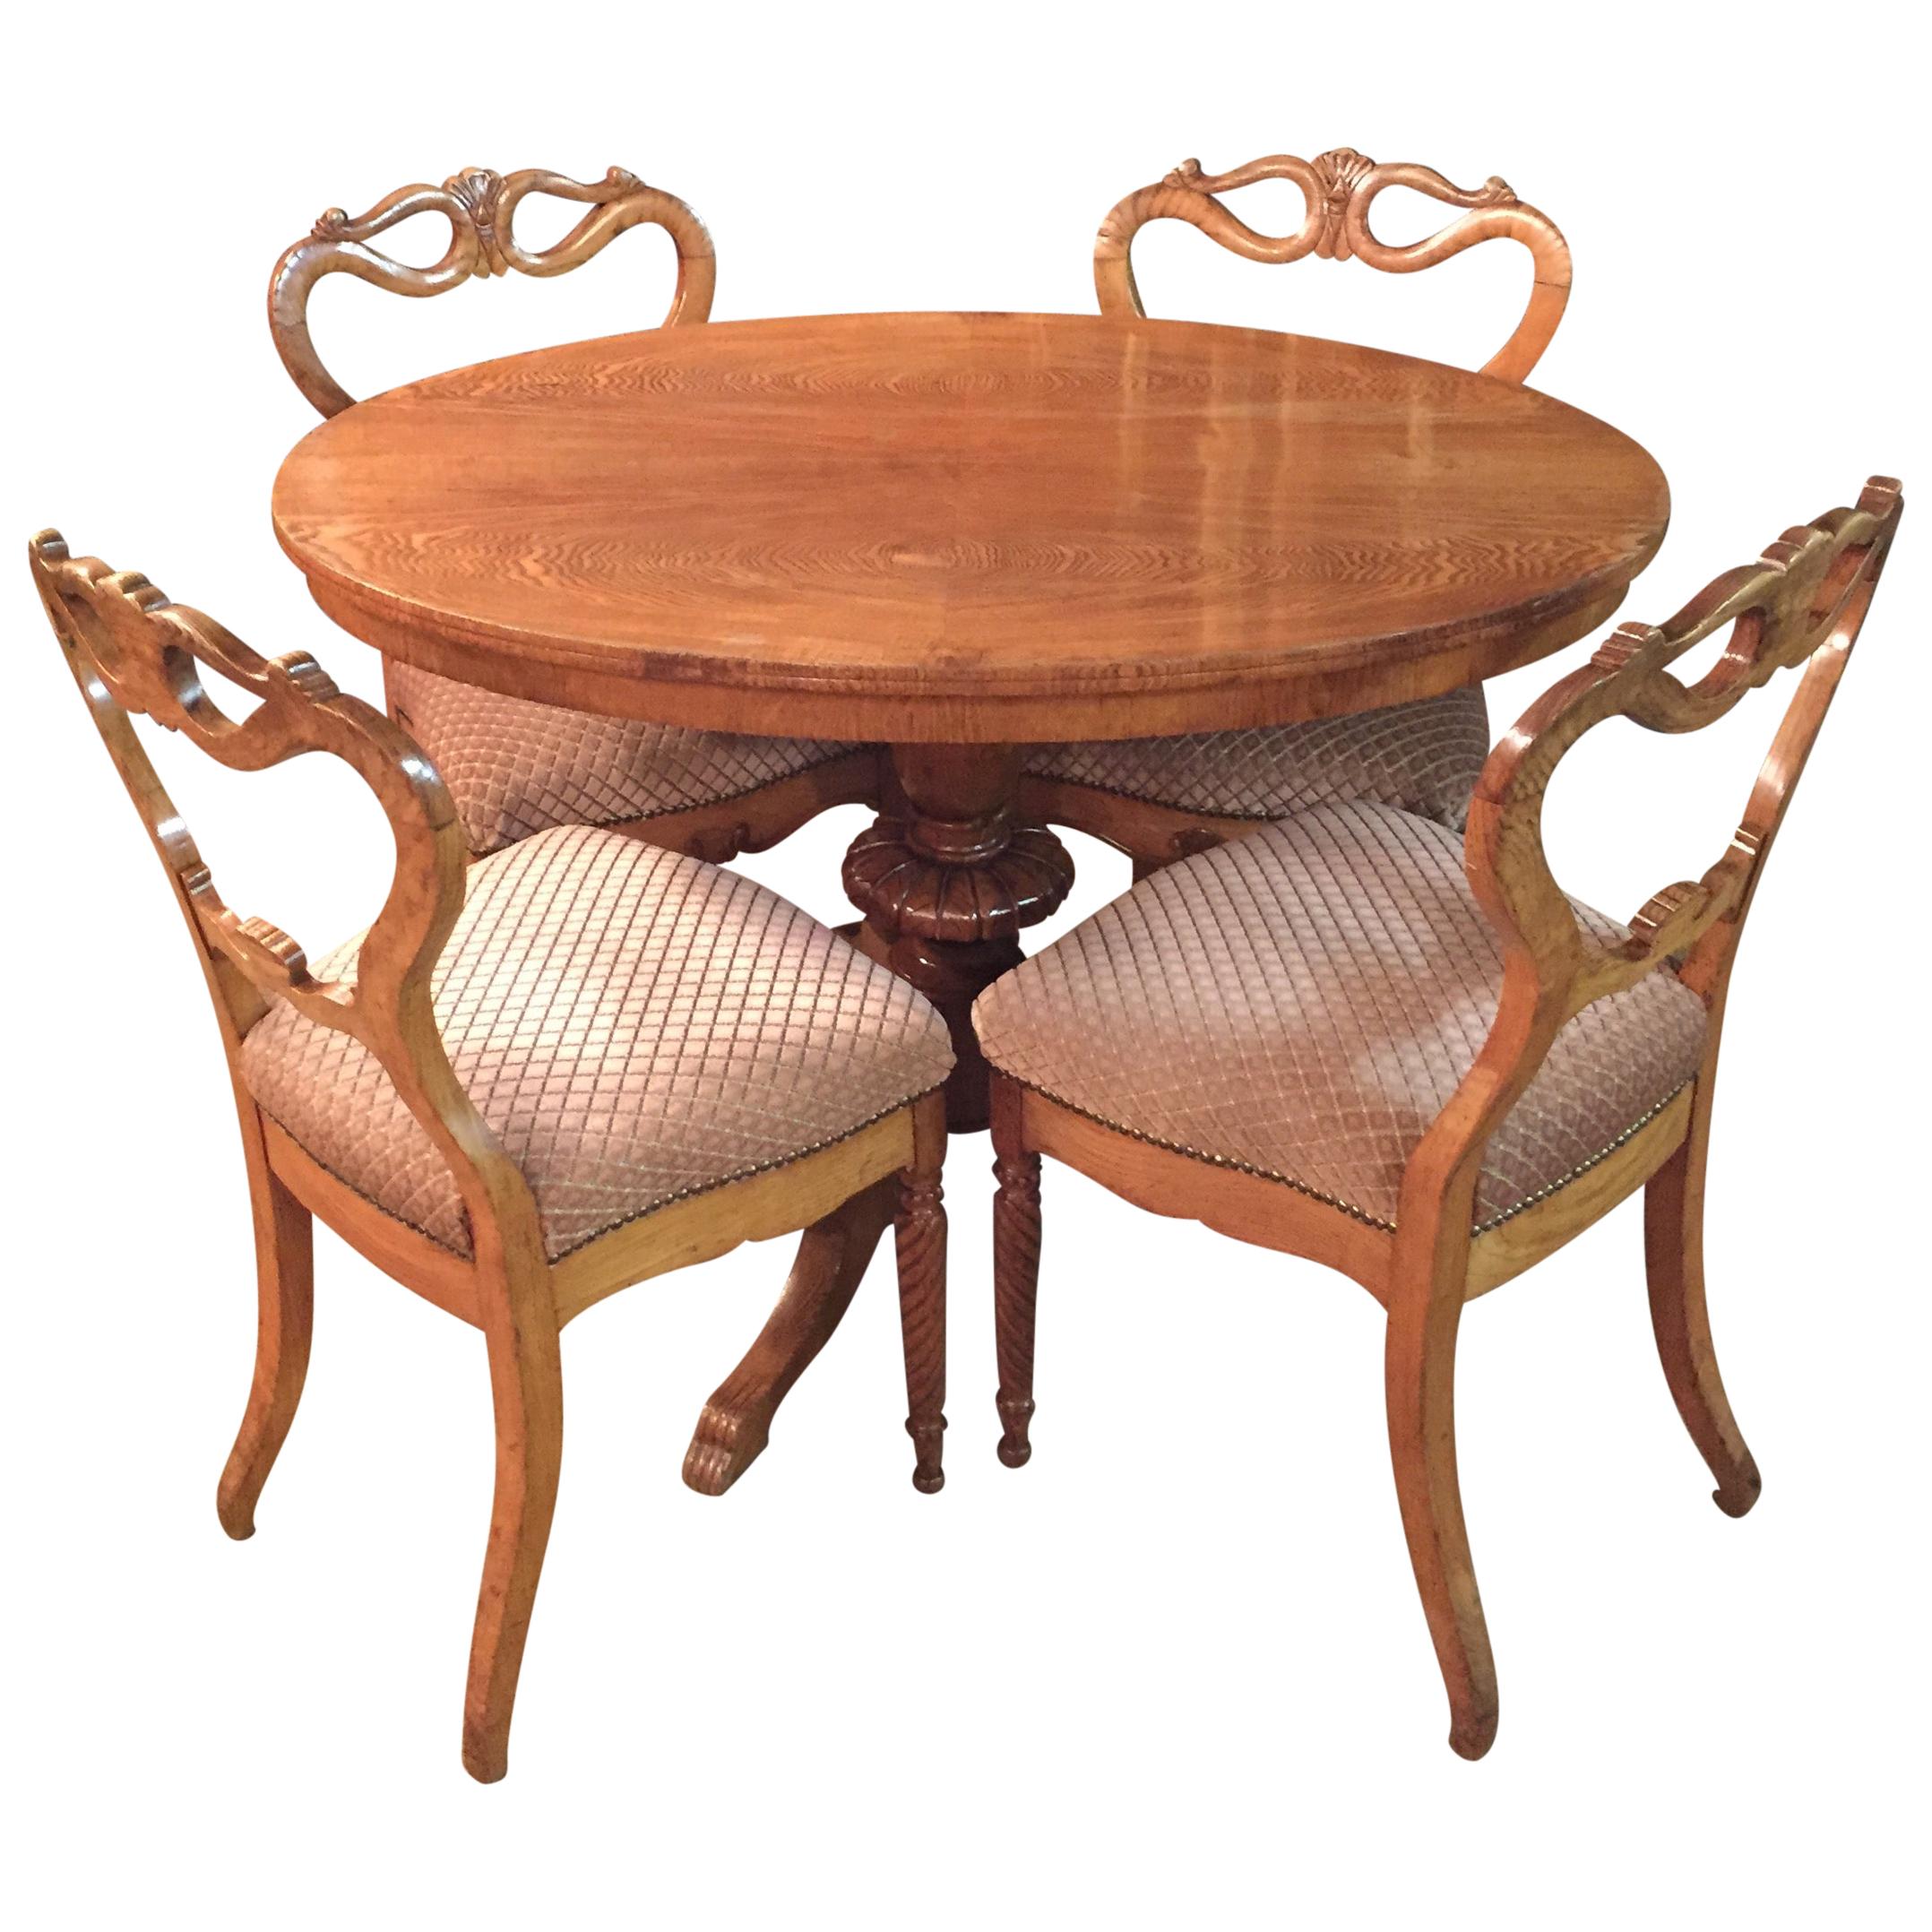 Original Biedermeyer Table with 4 Chairs circa 1850 Ashwood